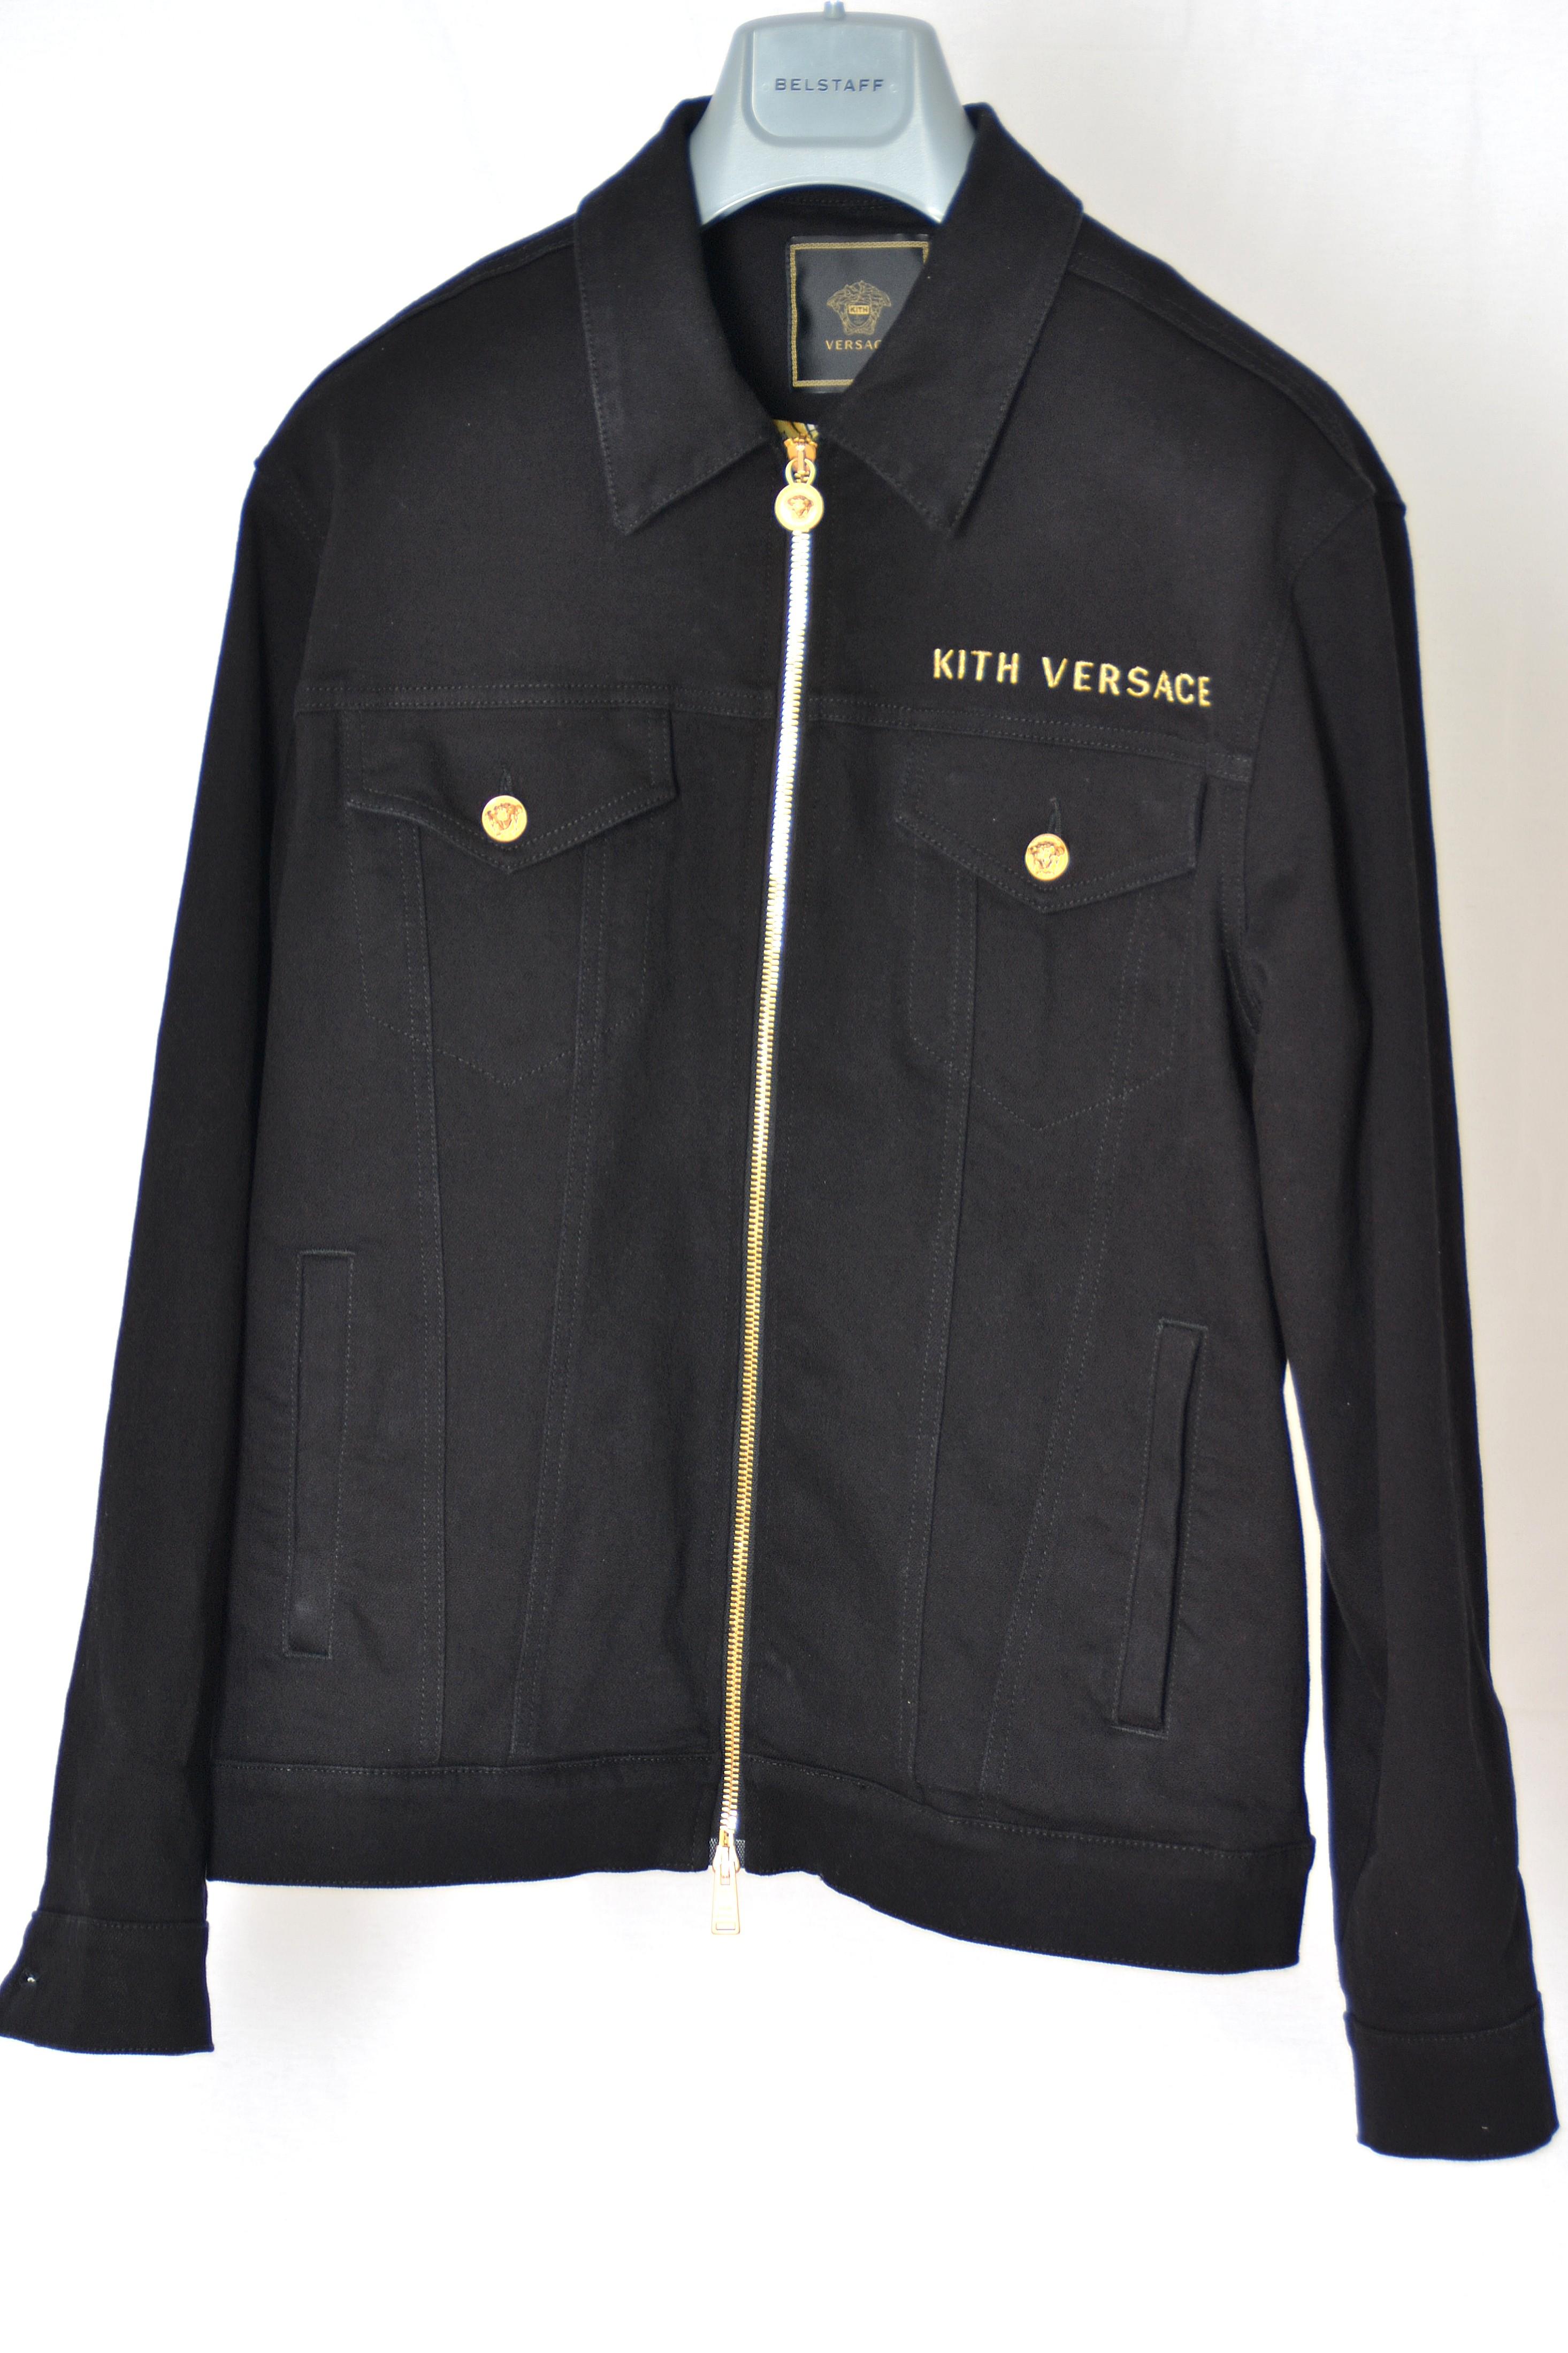 kith versace jean jacket